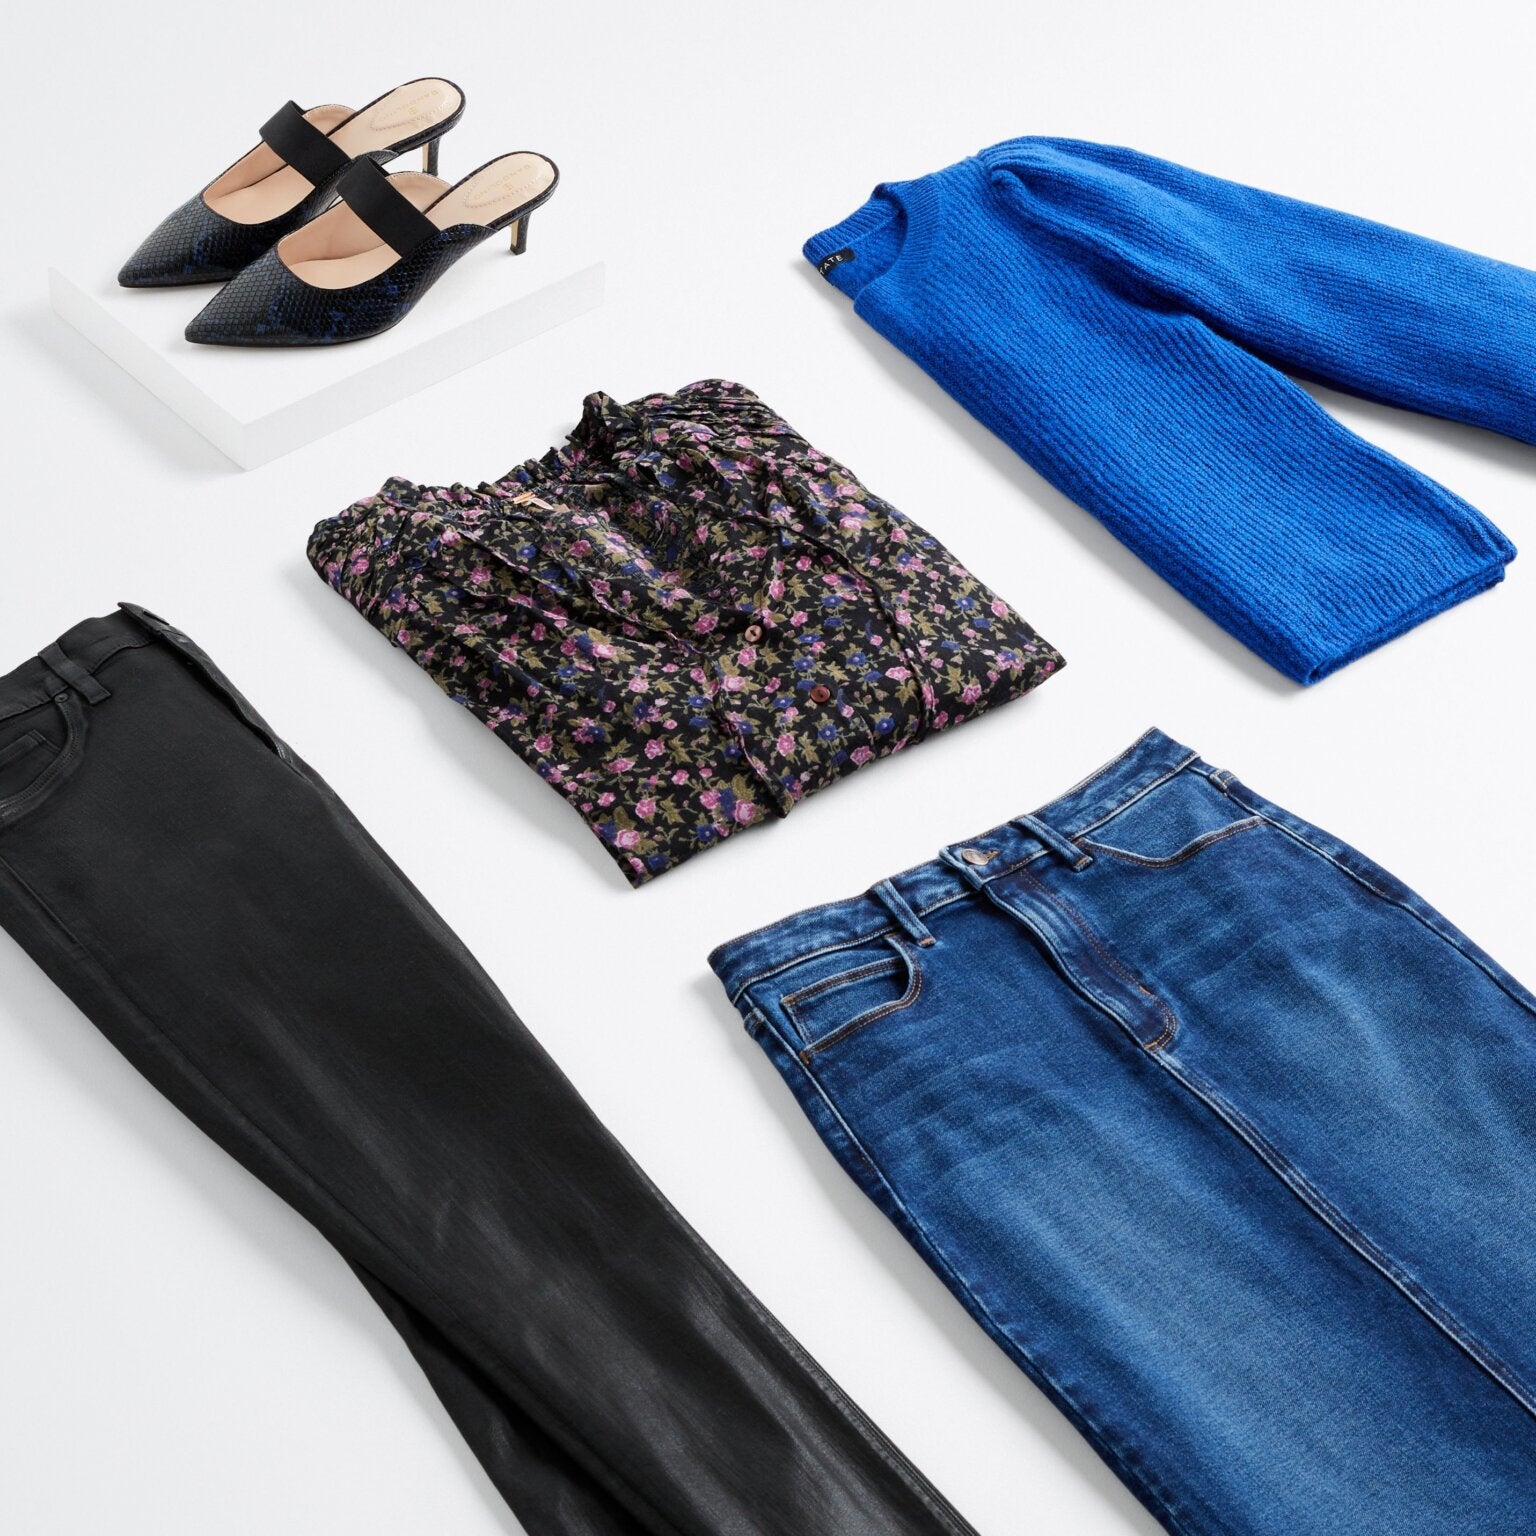 Jewel tone - Sapphire Blue - Sweater flatlay, jeans, floral blouse, black heels